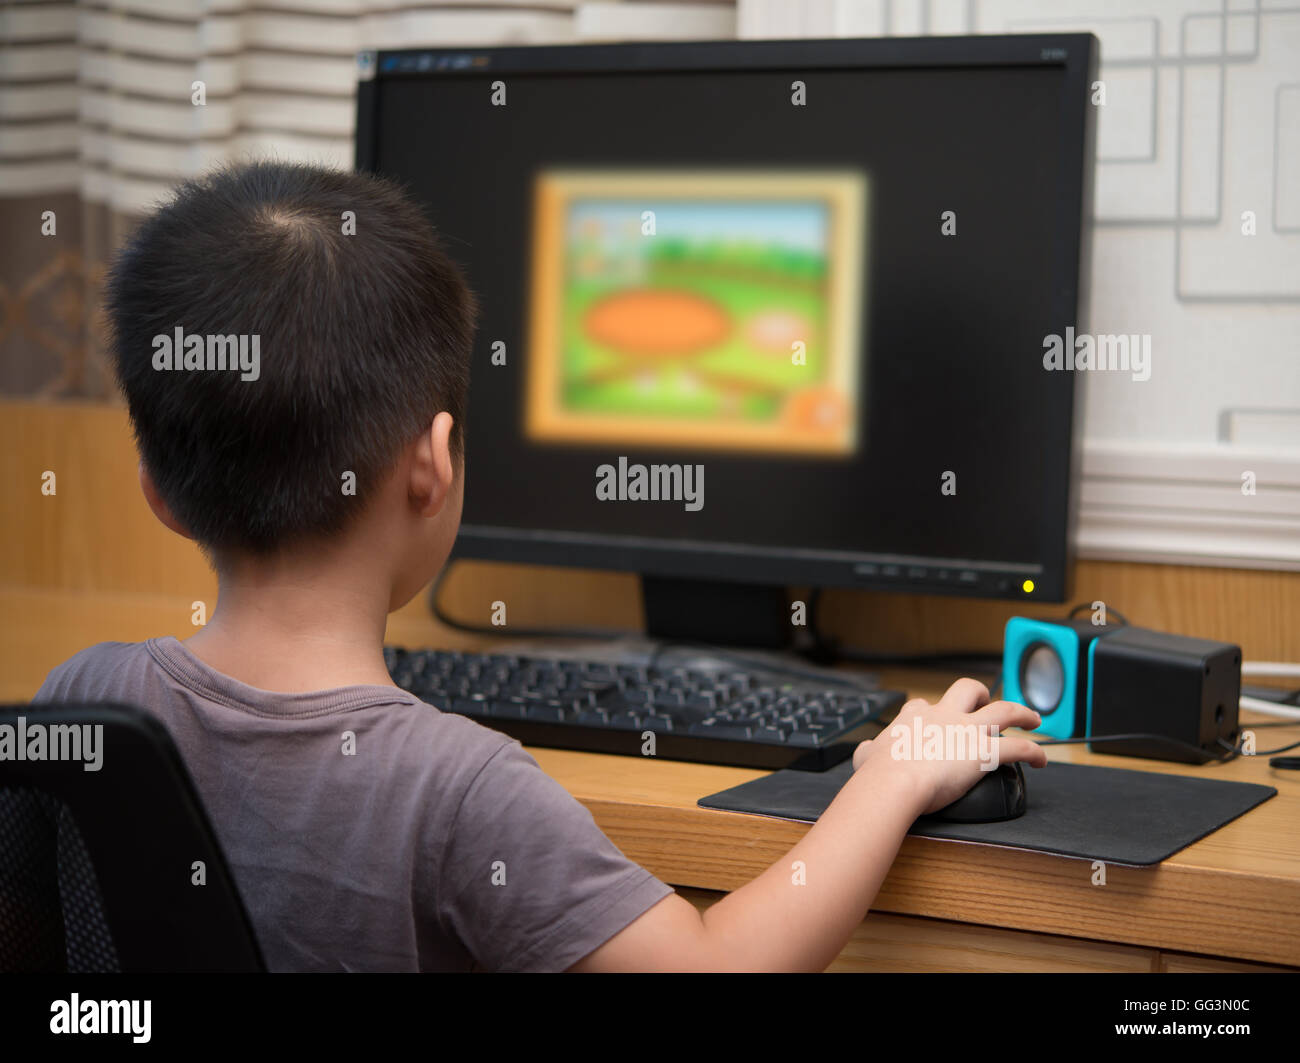 kid playing computer